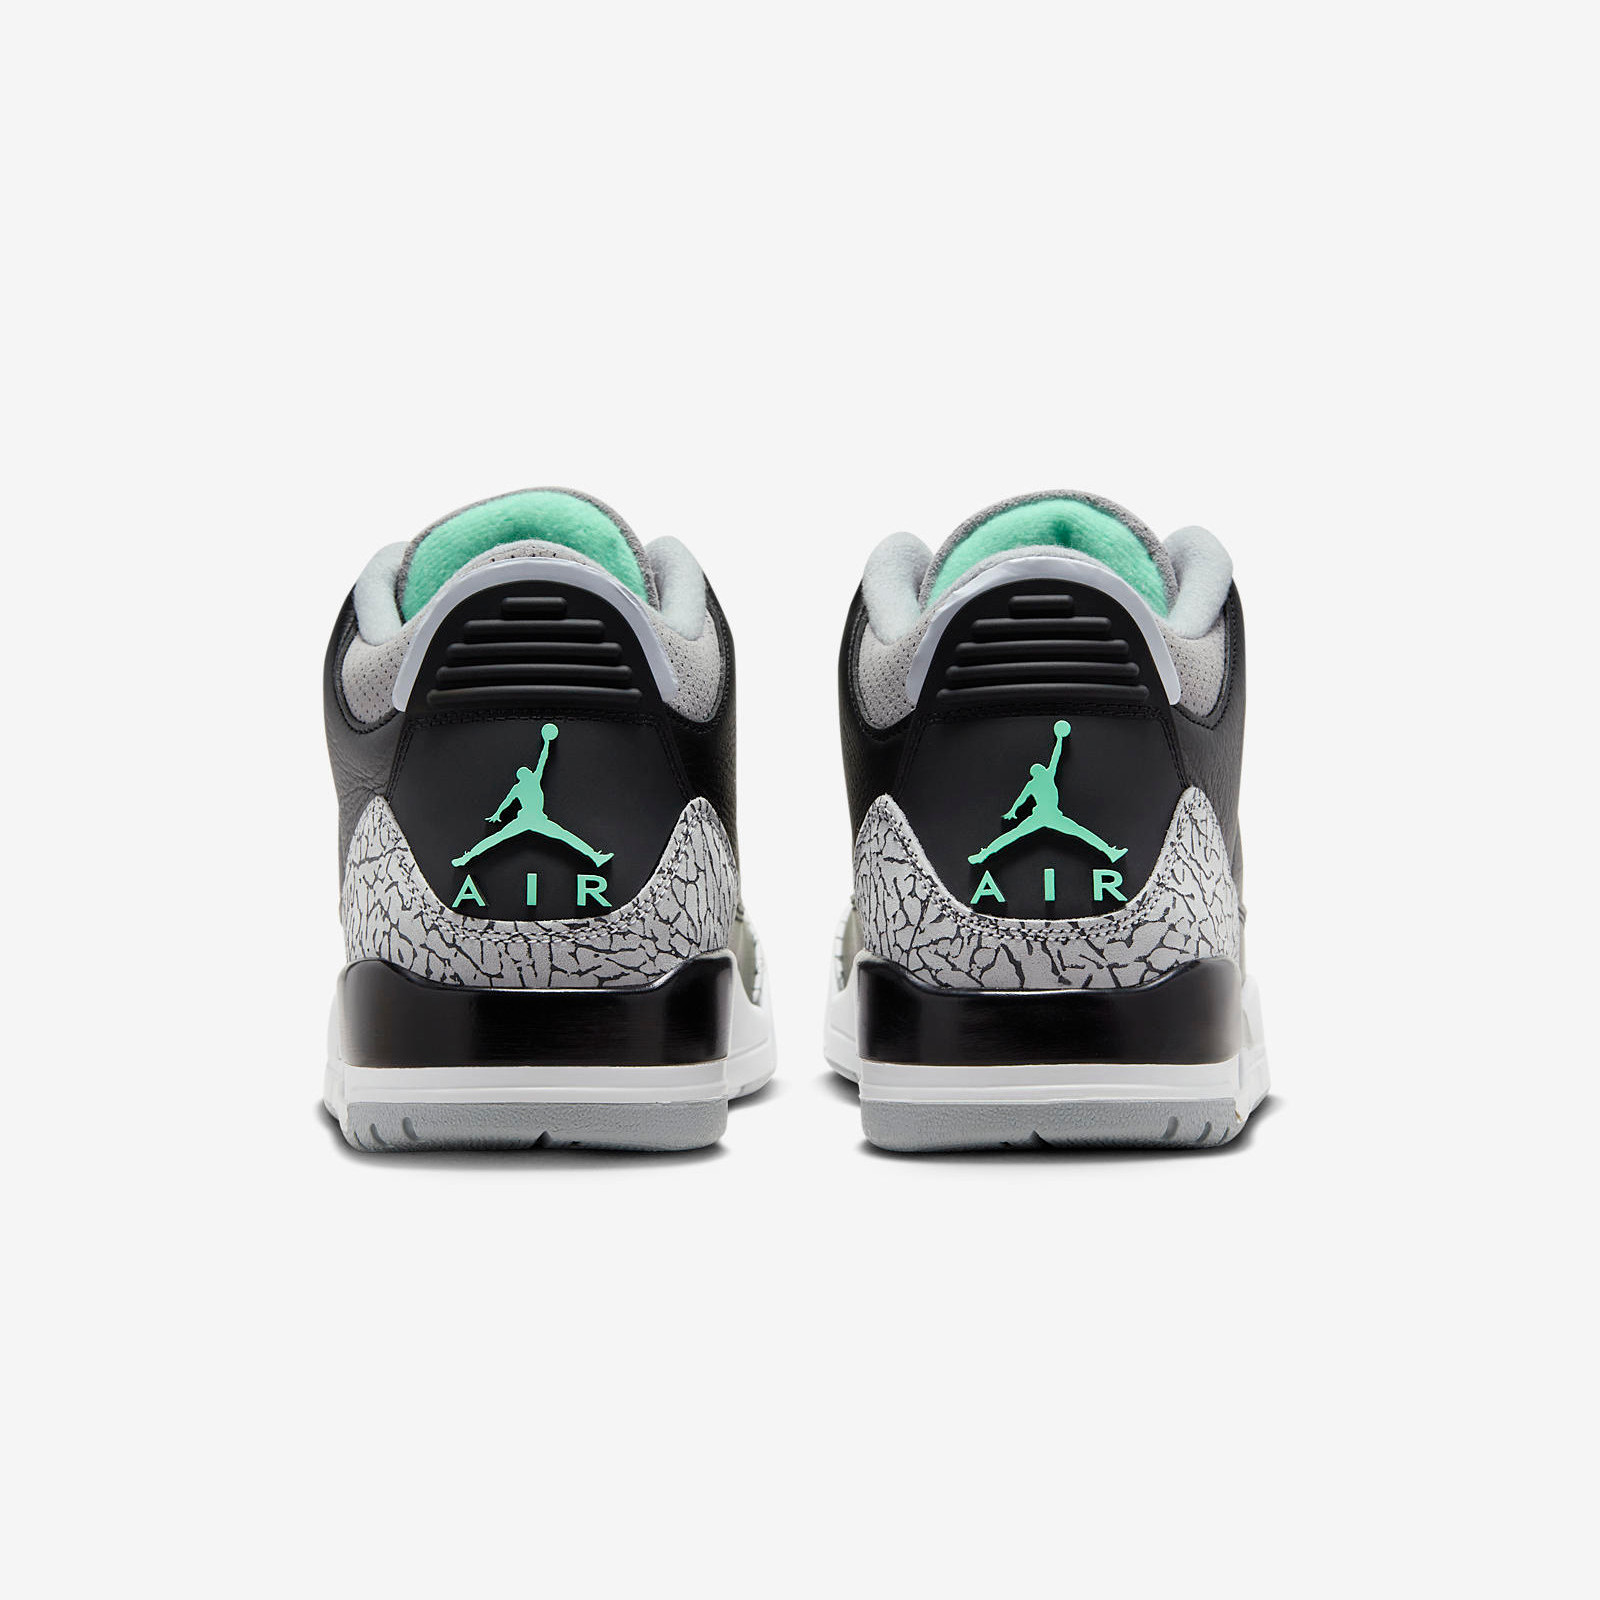 Air Jordan 3 Retro
« Green Glow »